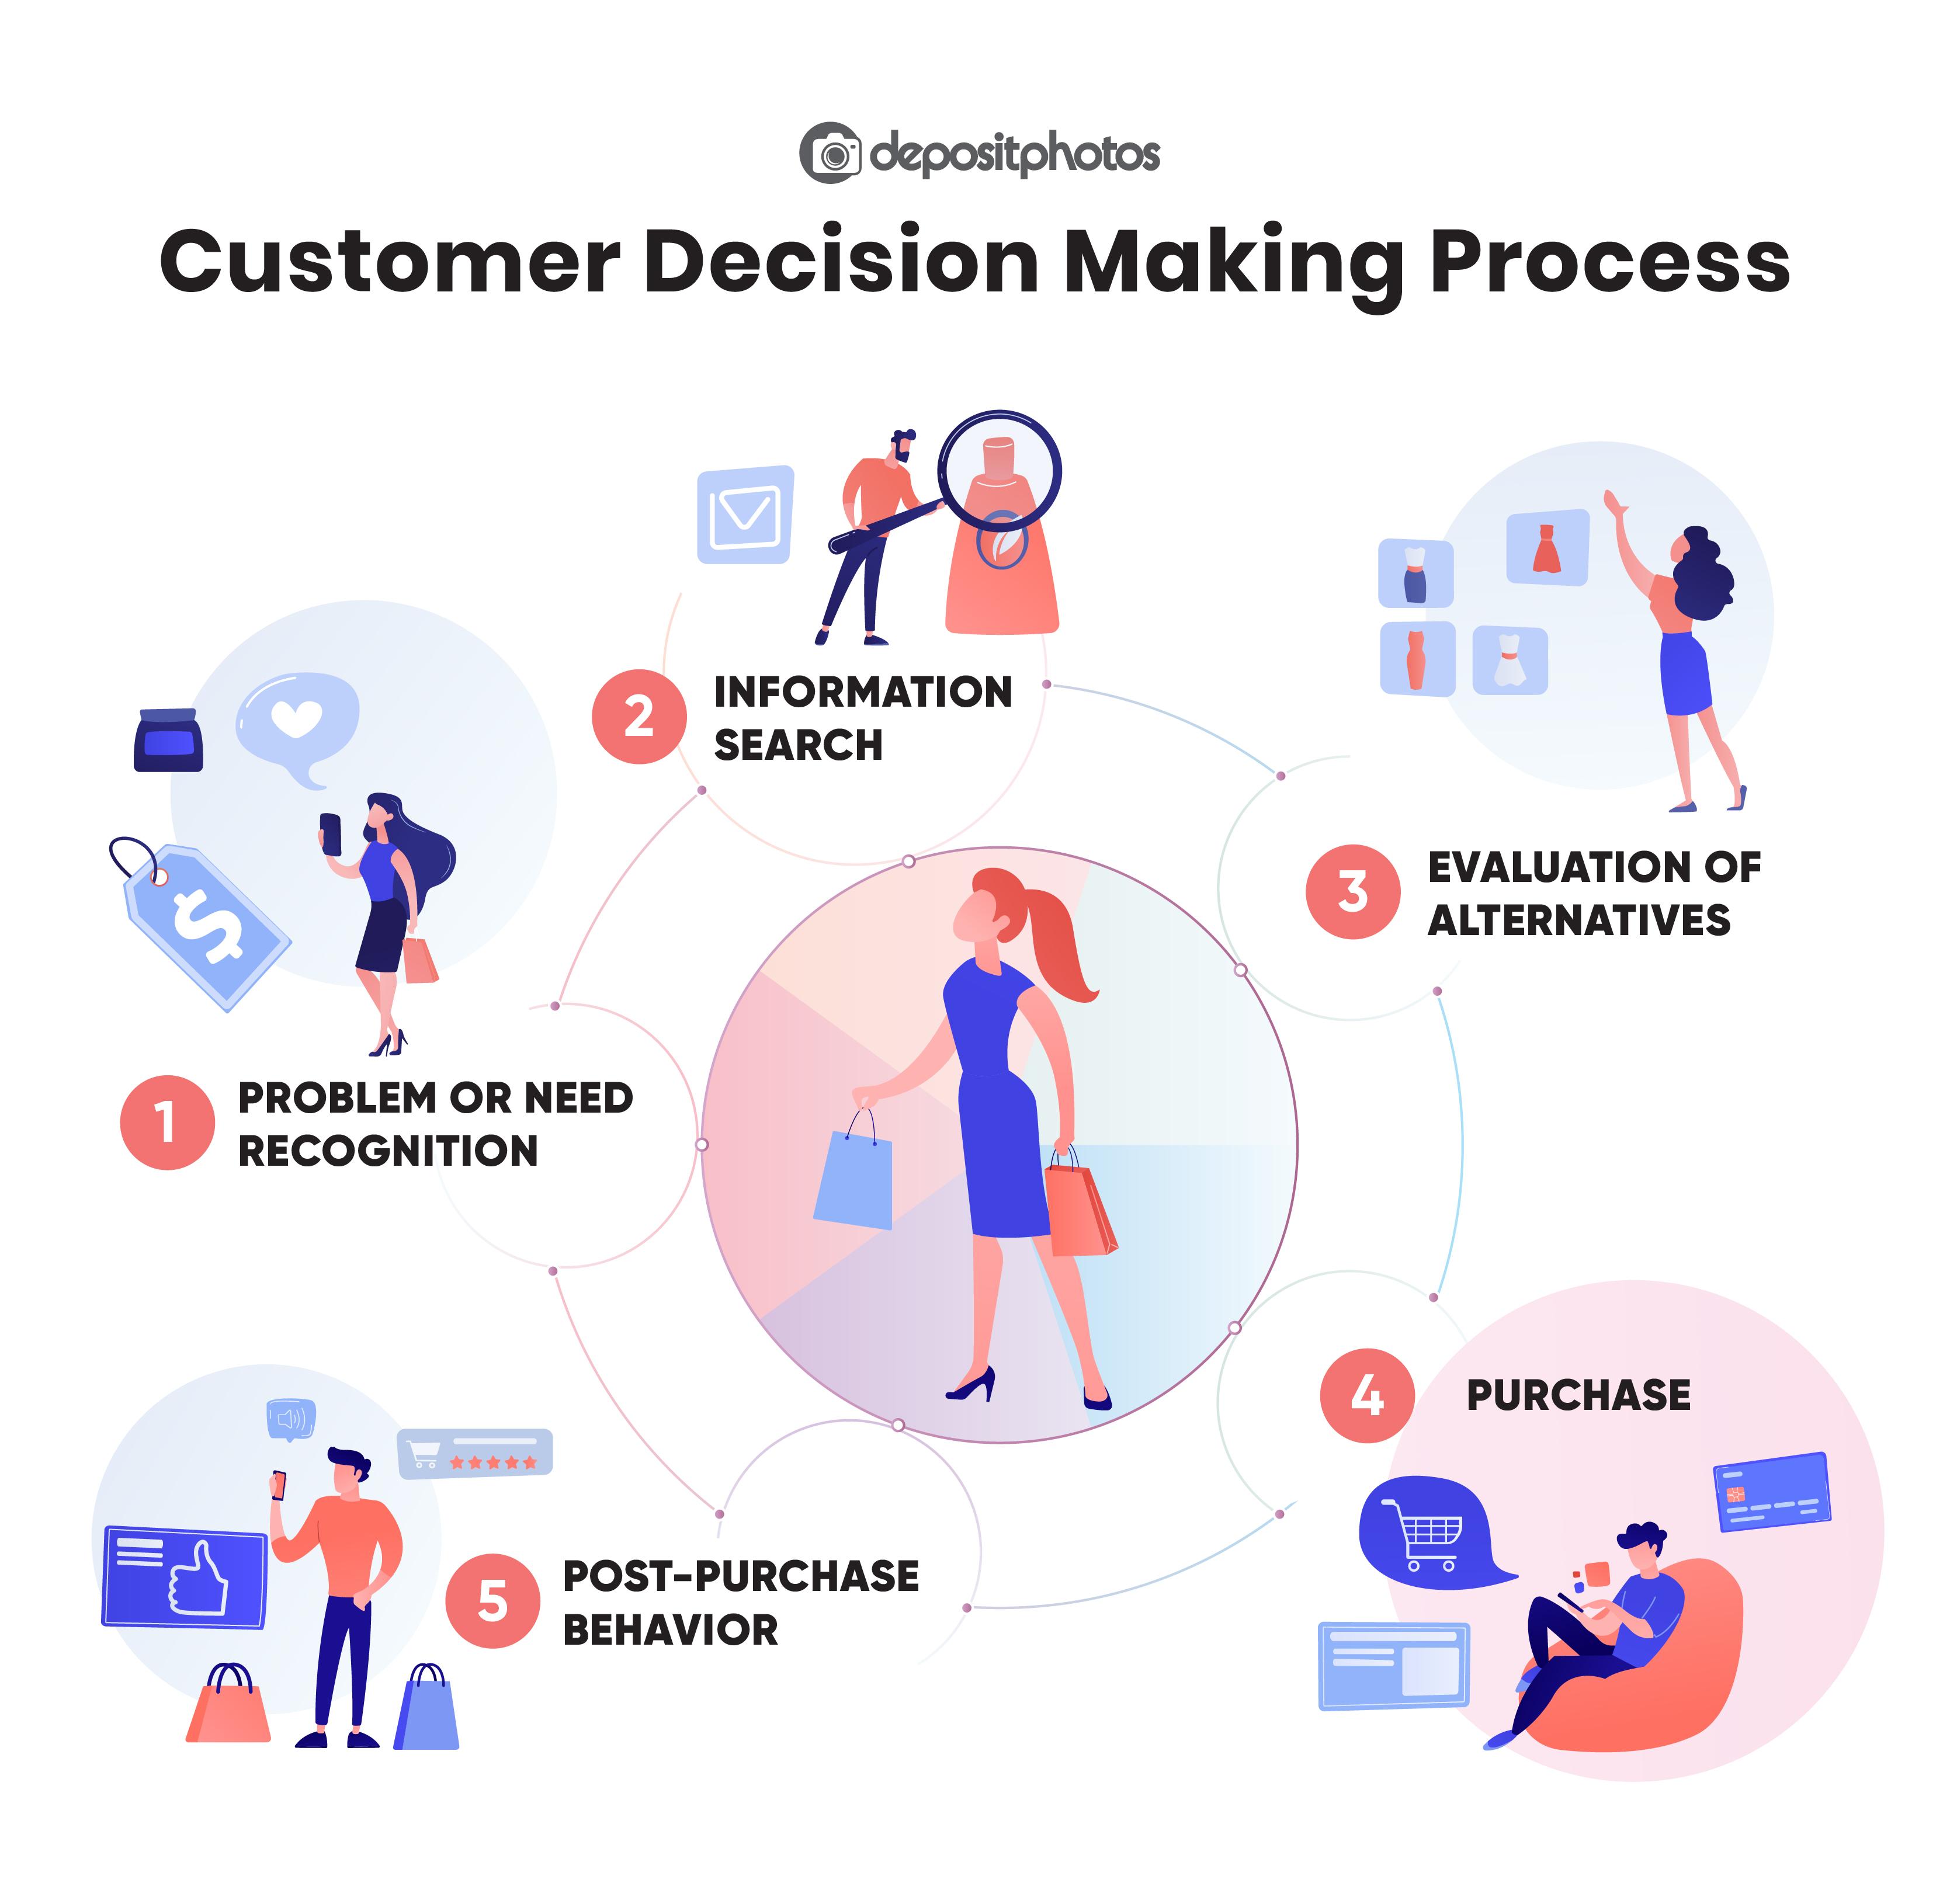 Сustomers’ decision-making process 5 steps